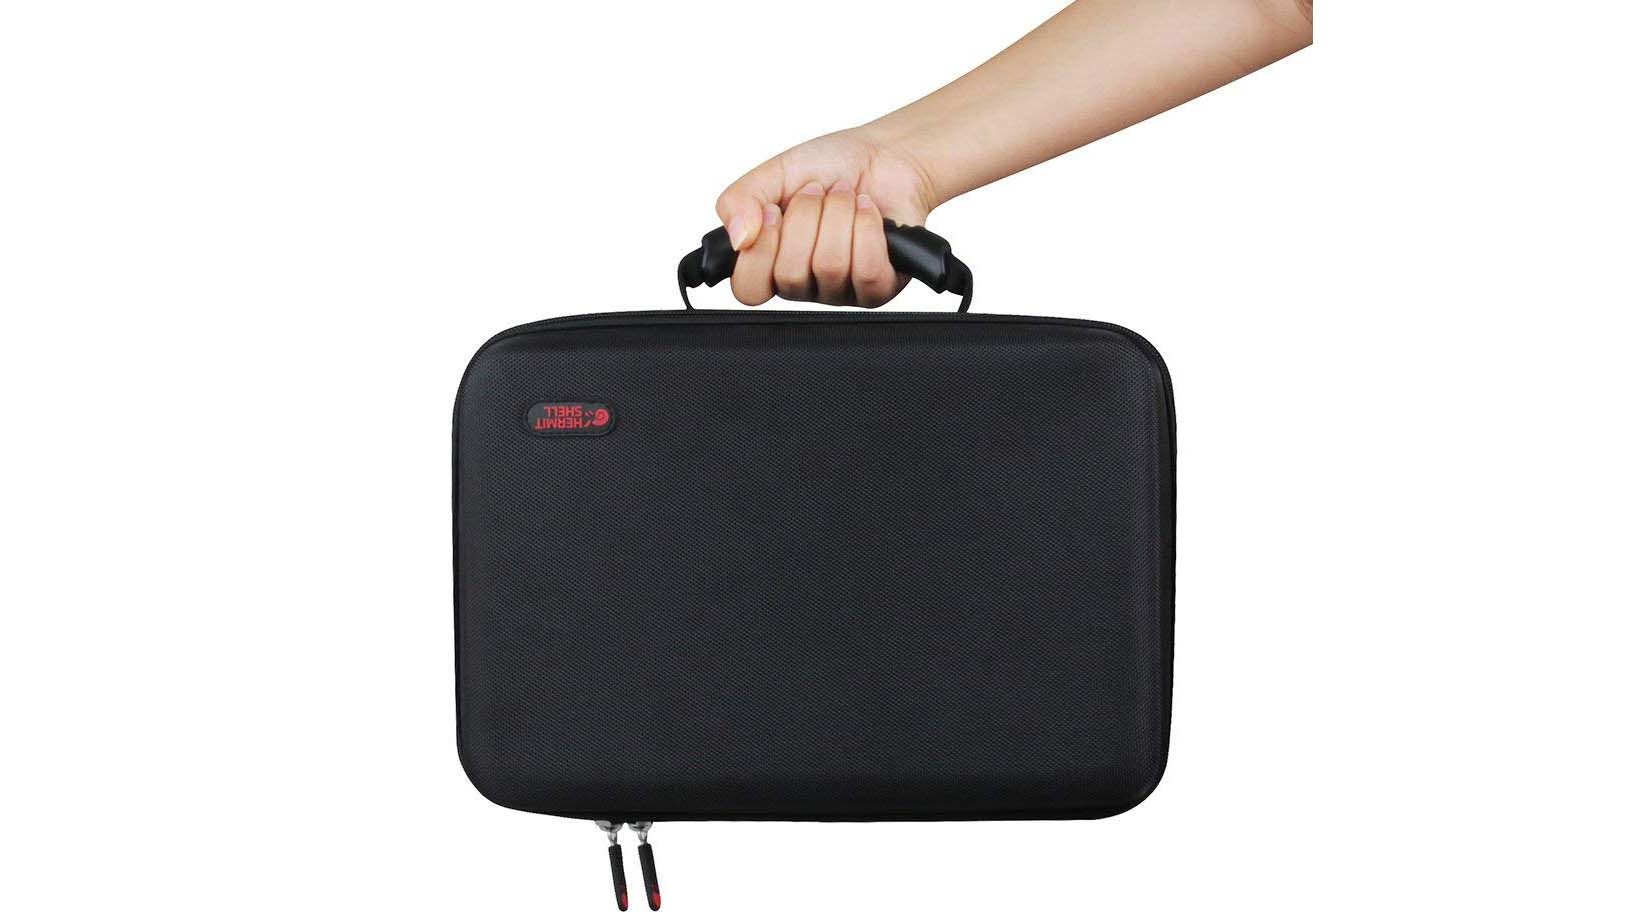 shockproof eva bag with strap for brushes